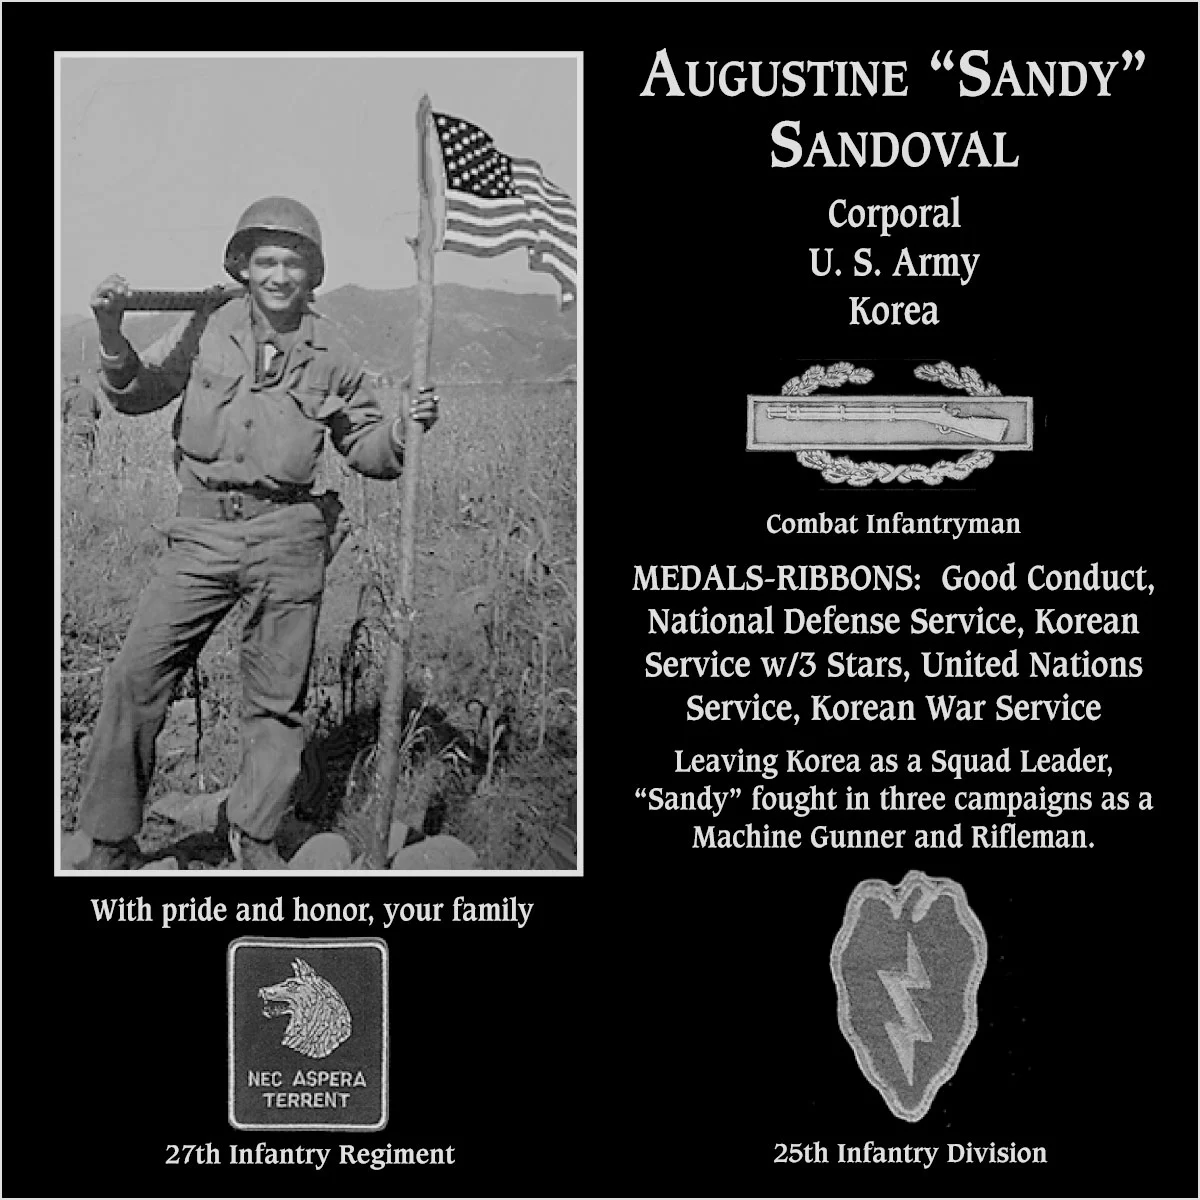 Augustine “Sandy” Sandoval